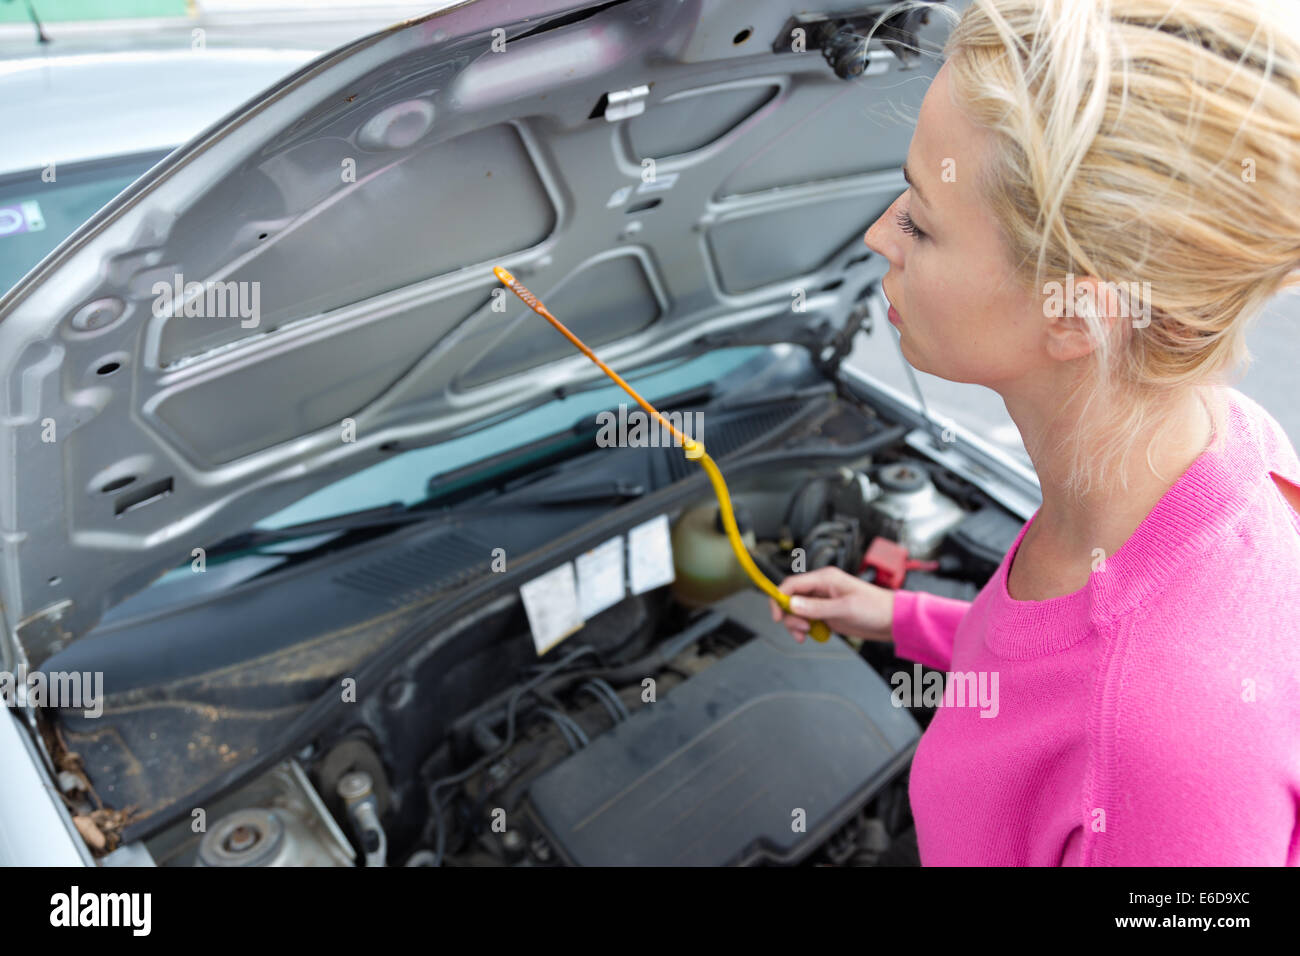 Woman inspecting broken car engine. Stock Photo